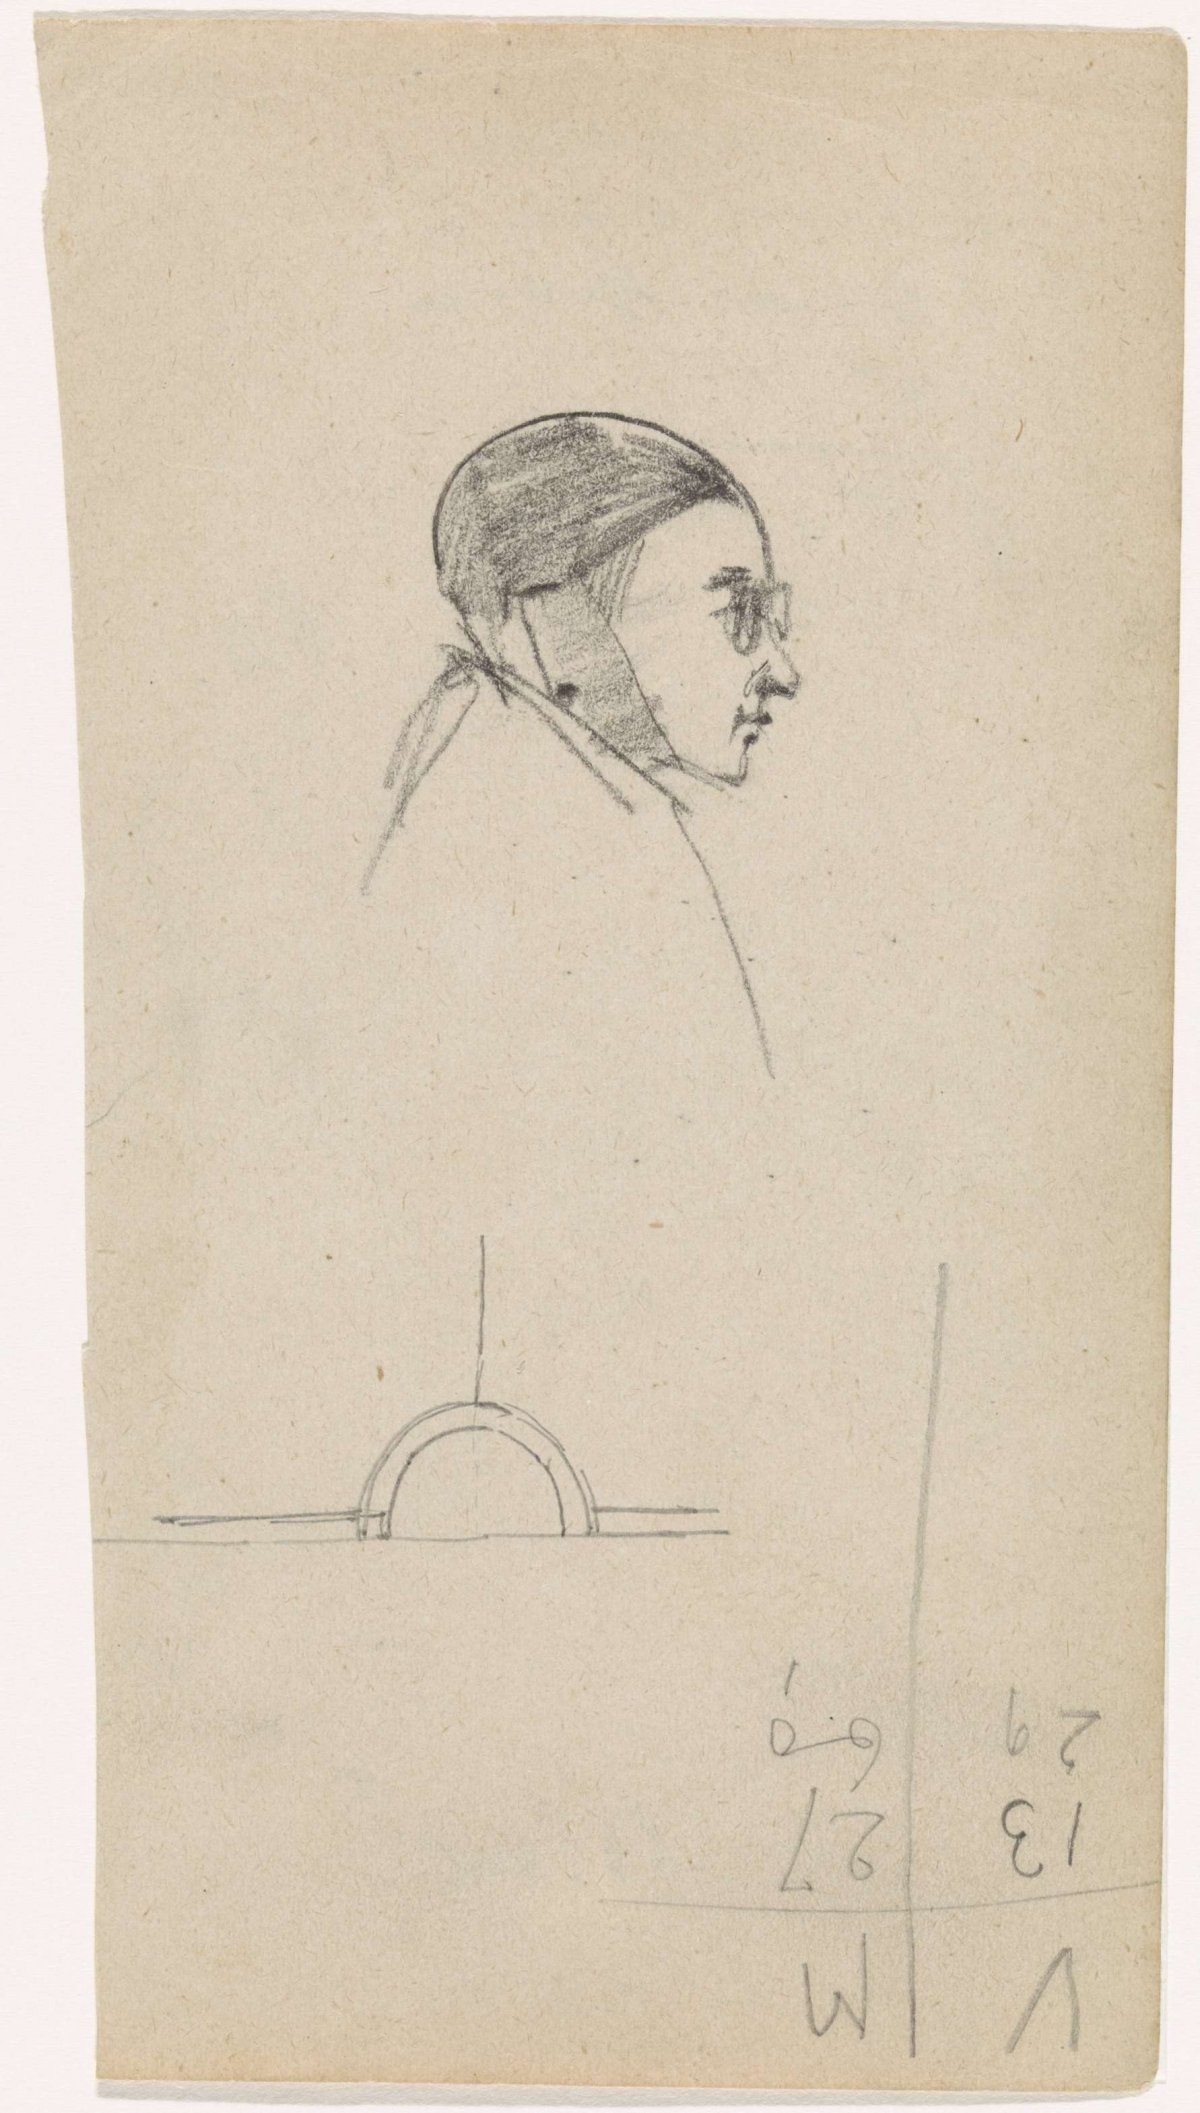 Man with bandage around head, Gerrit Willem Dijsselhof, 1876 - 1924